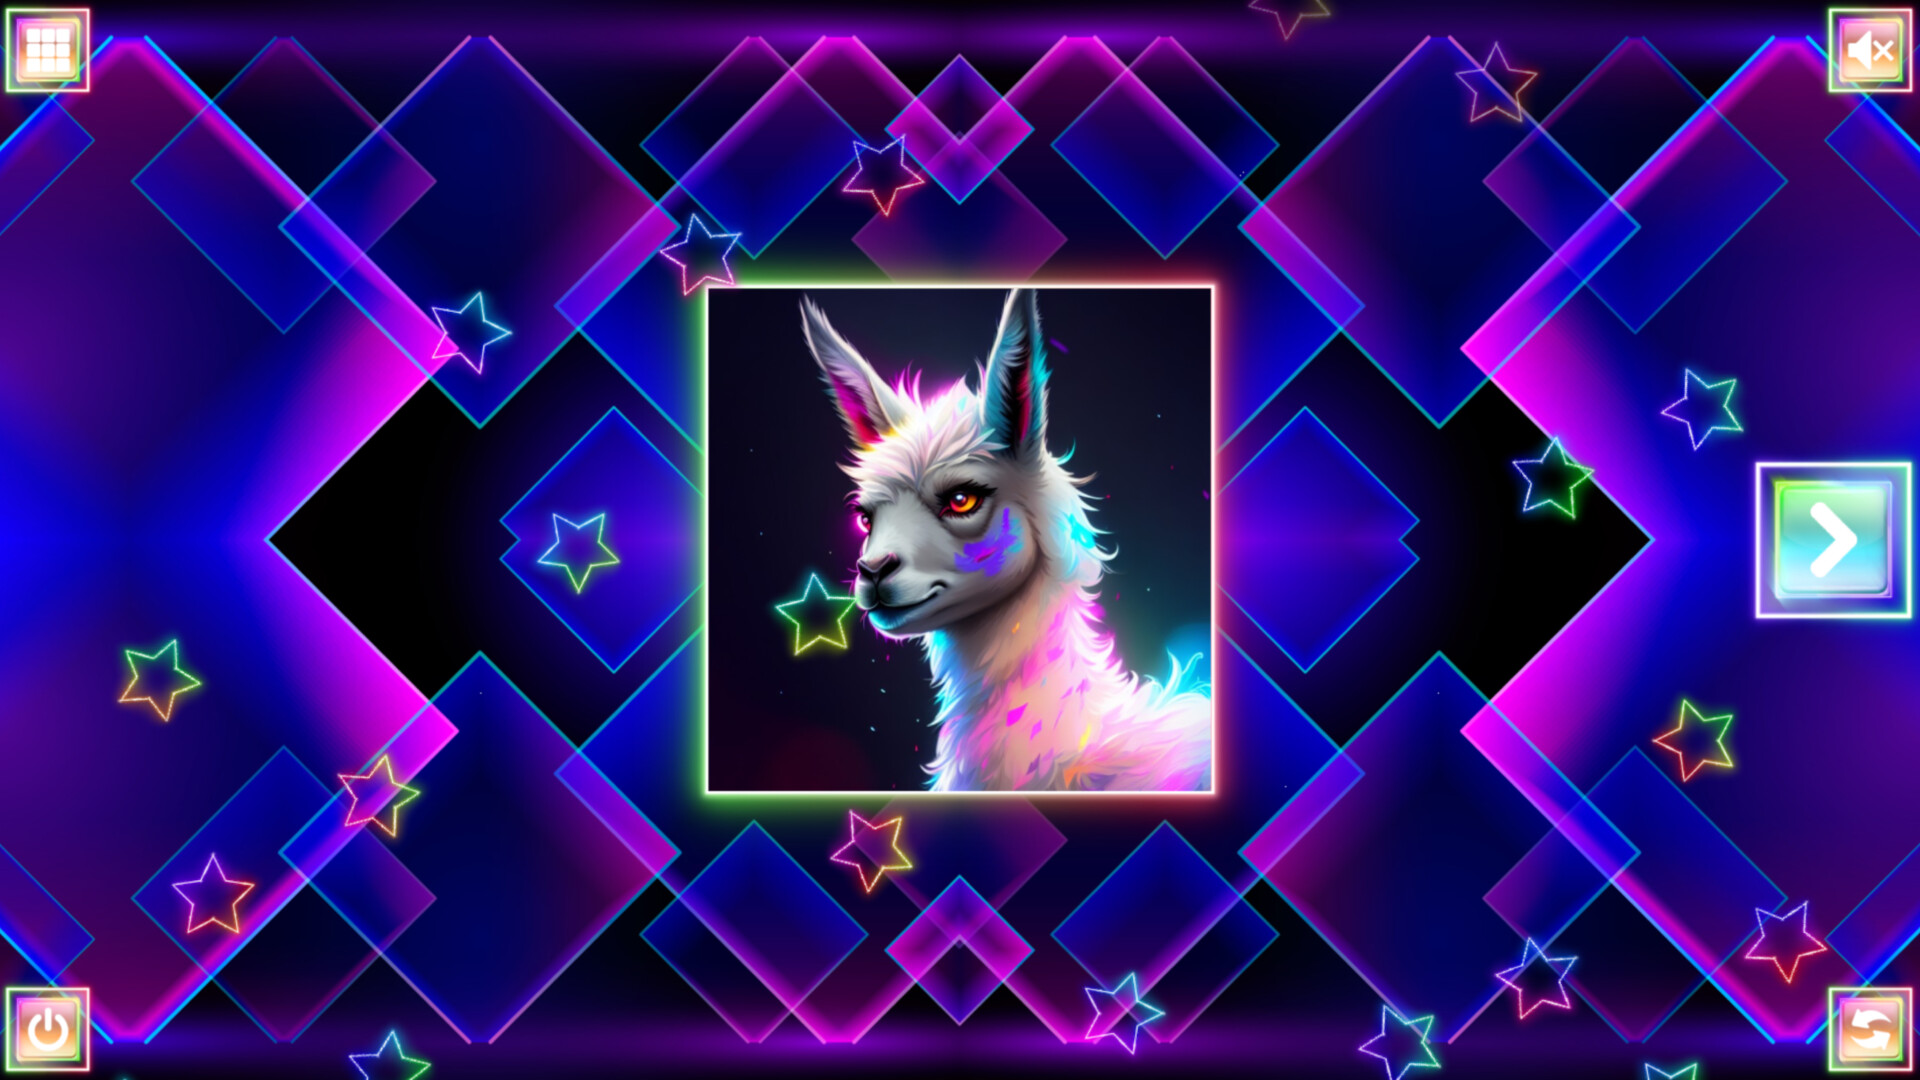 [$ 0.43] Neon Fantasy: Animals Steam CD Key